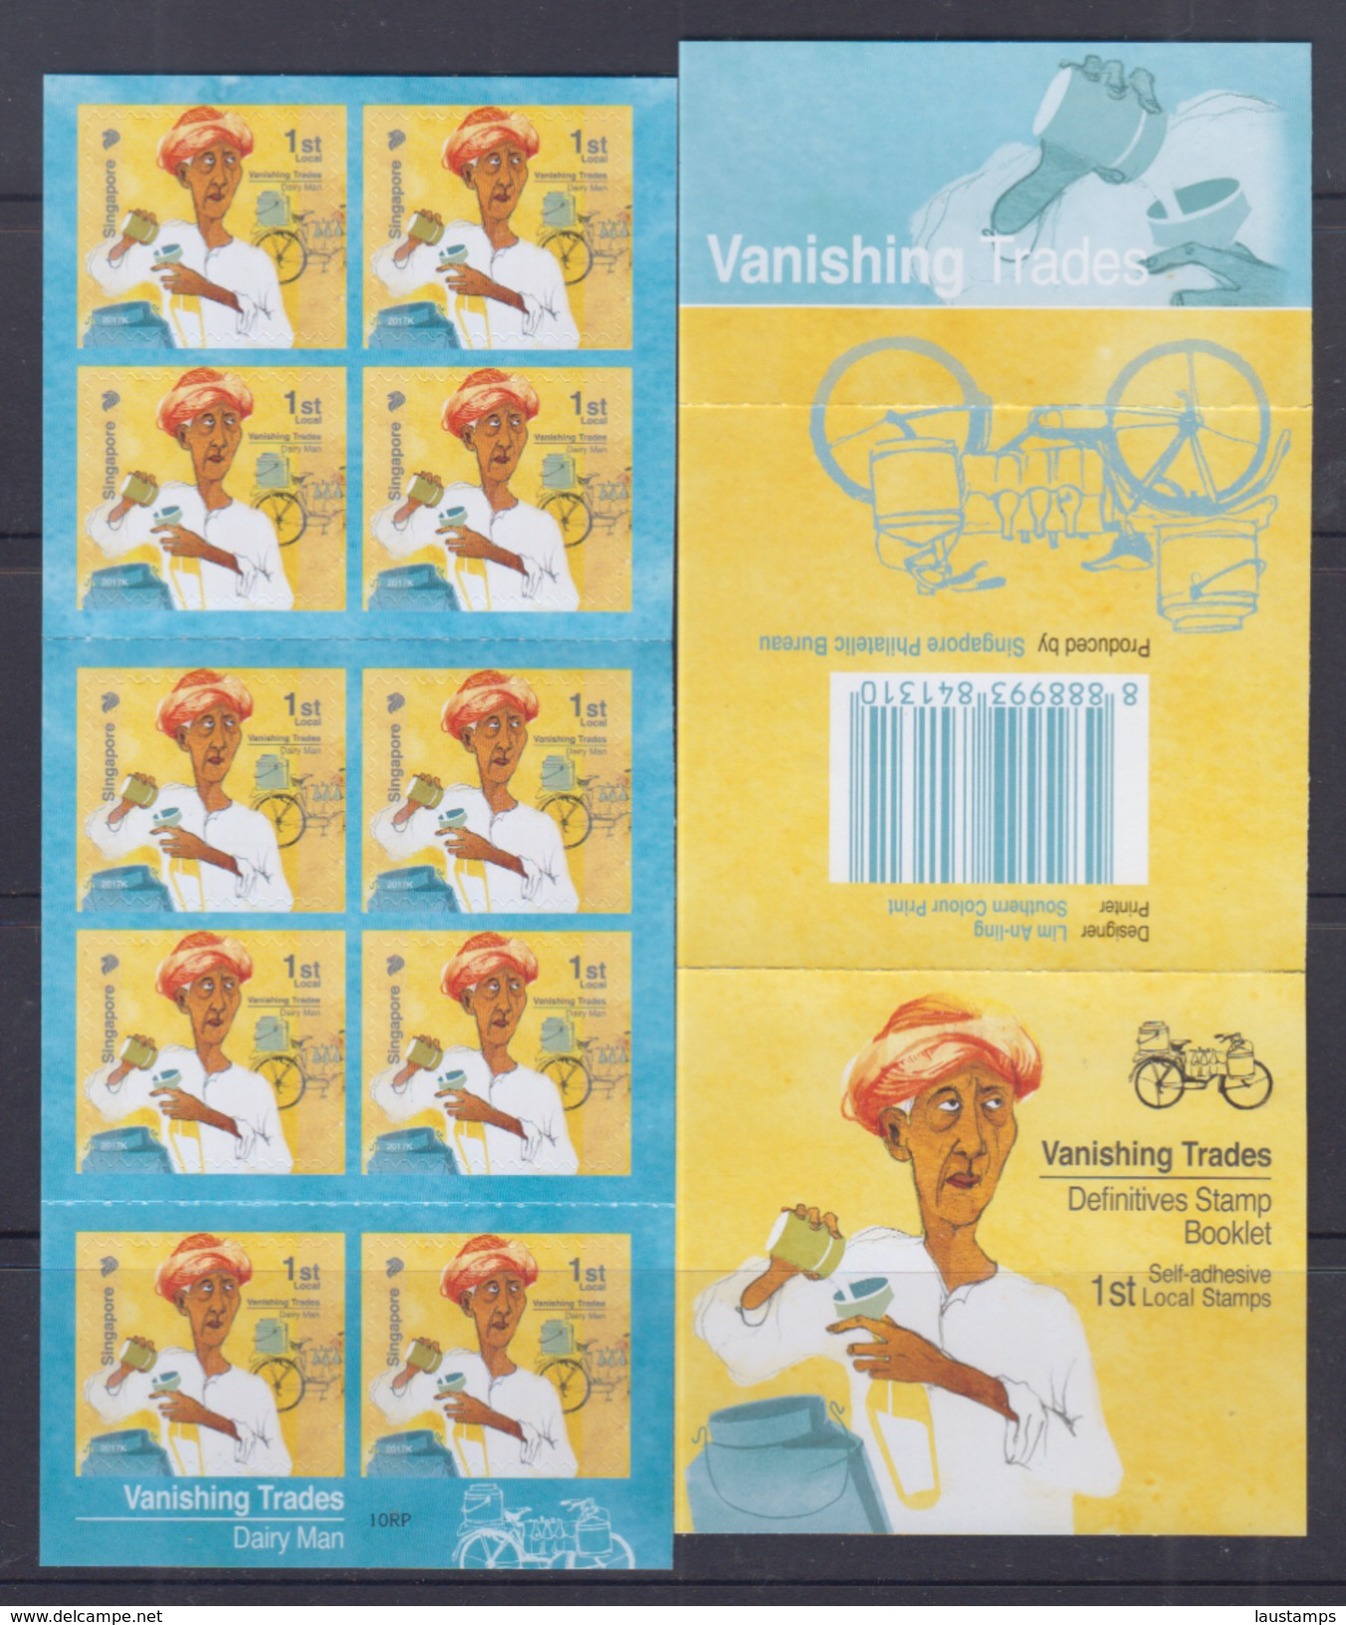 Singapore 2013 Vanishing Trades, Dairy Man Bicycle Booklet **10th Reprint (Imprint 2017K) MNH - Cycling